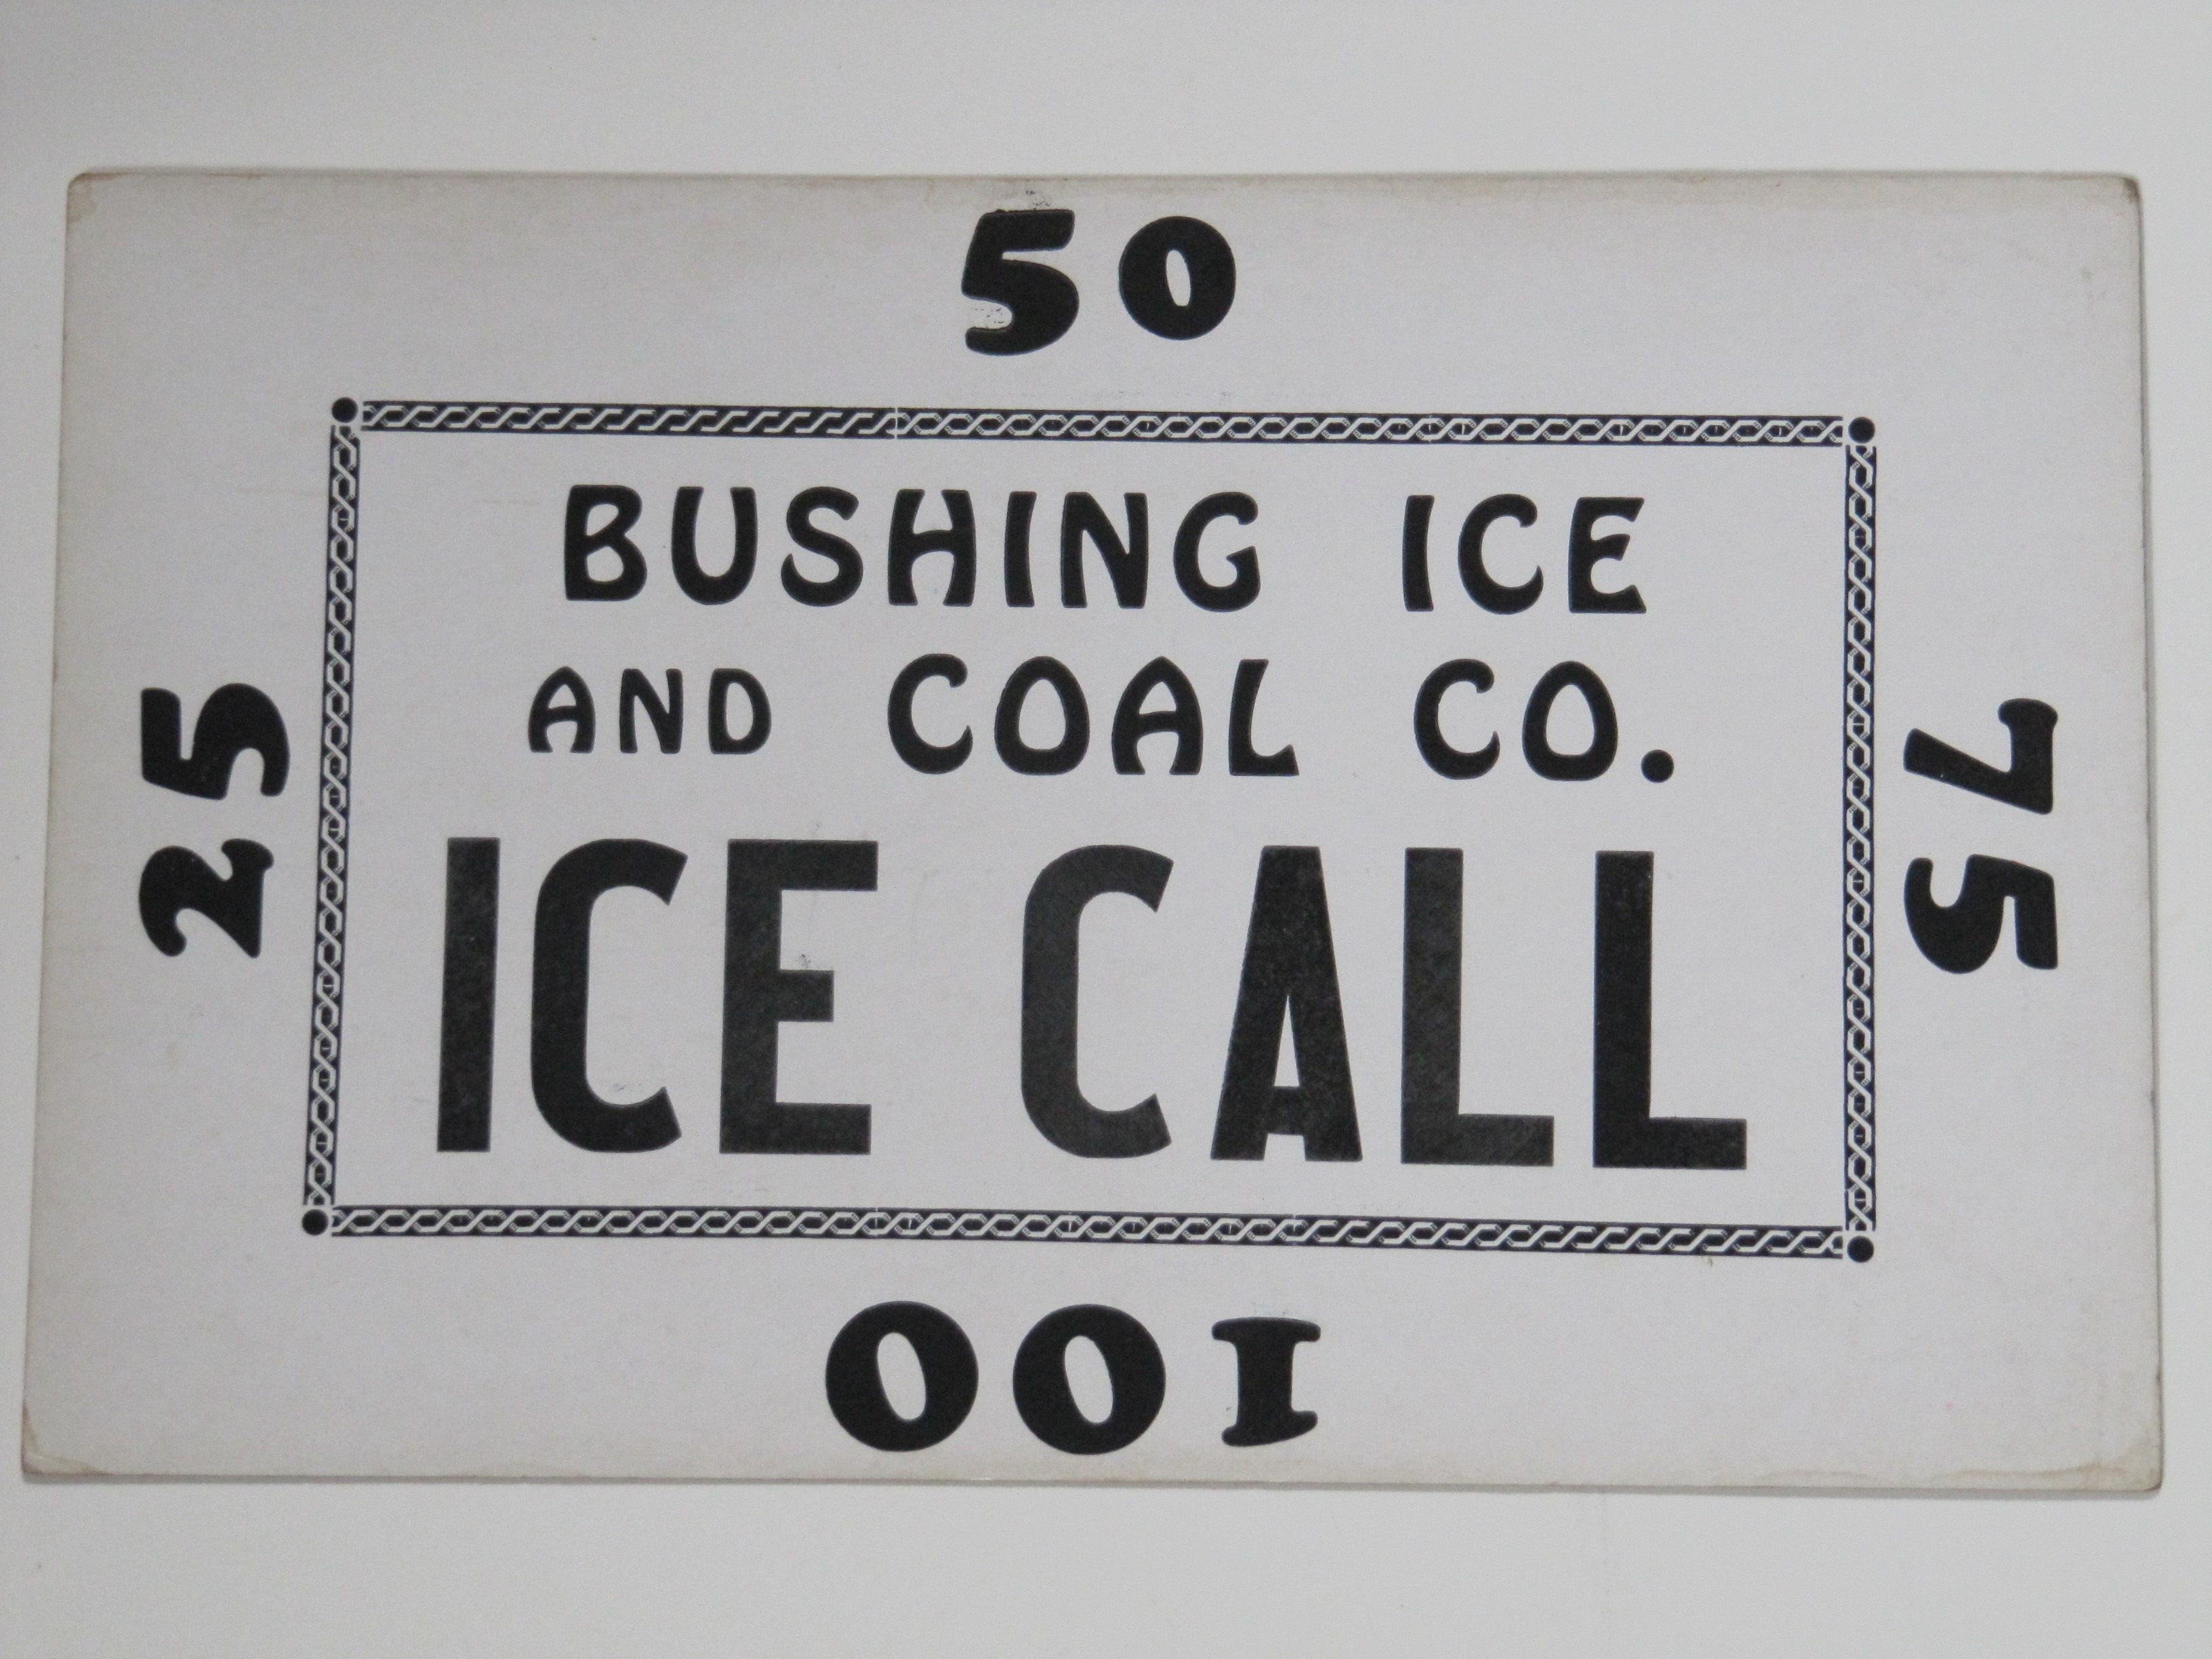 Bushing Ice & Coal